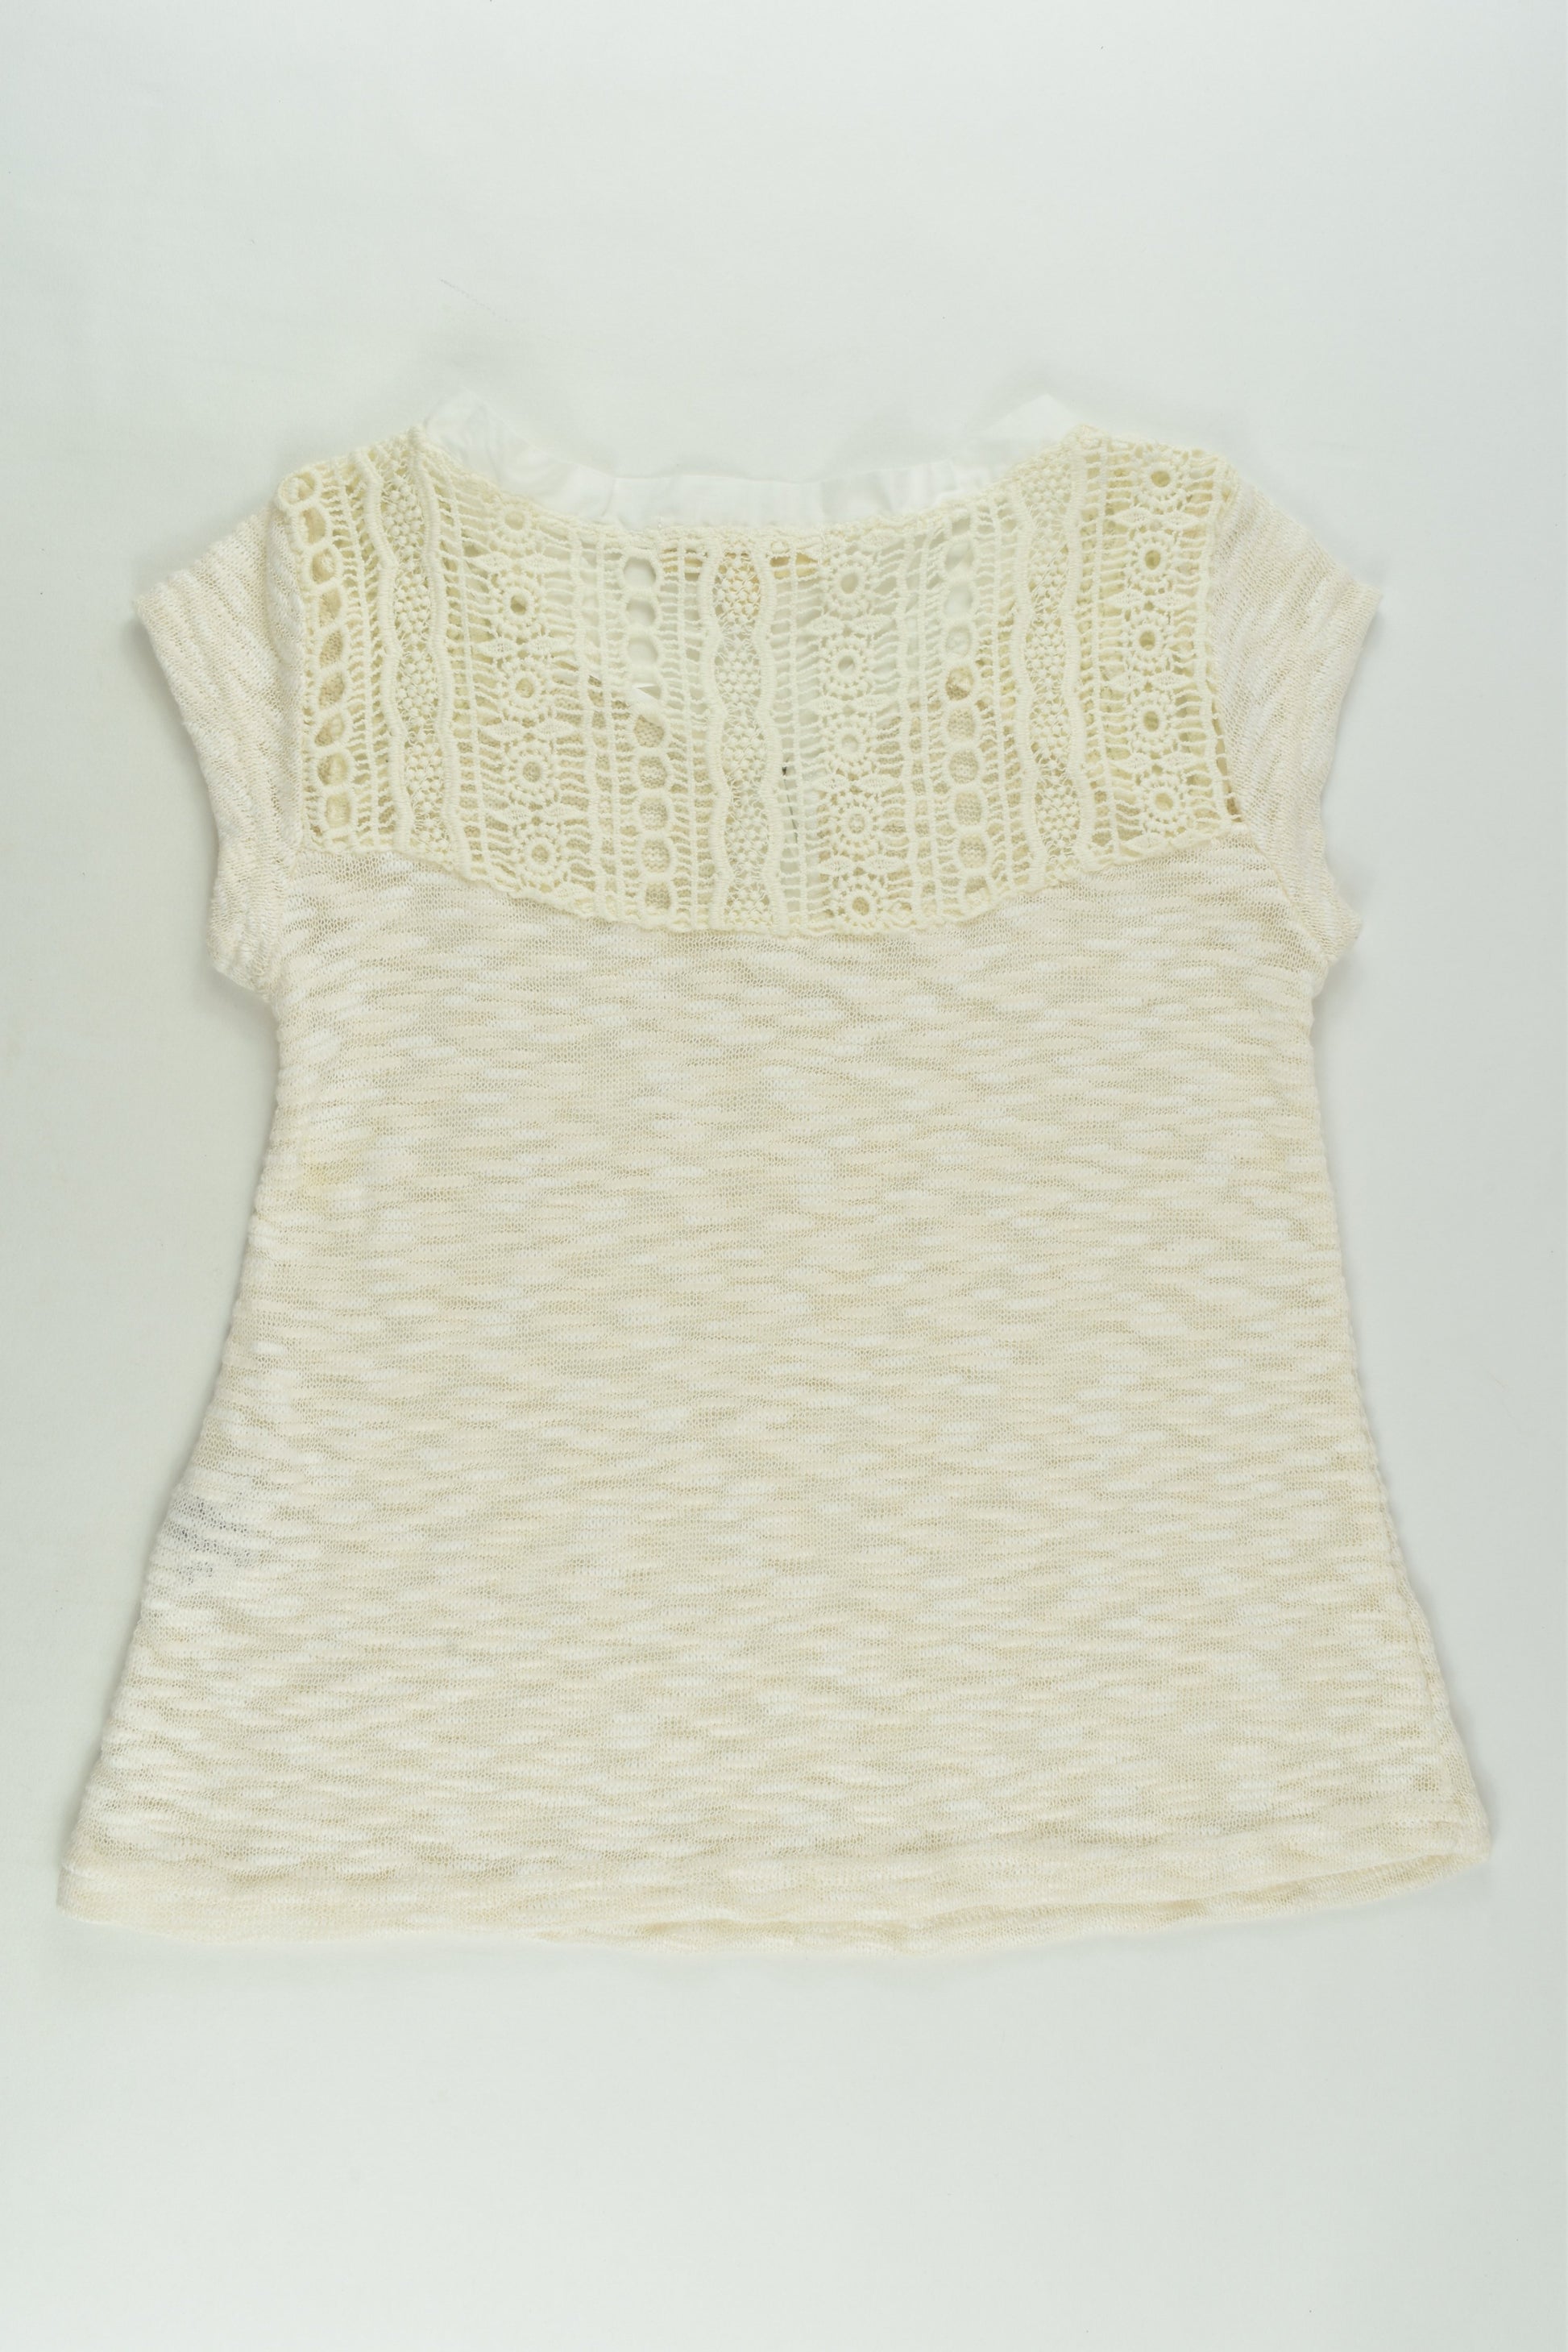 Gum Size 8 Knit T-shirt with Lace Detail